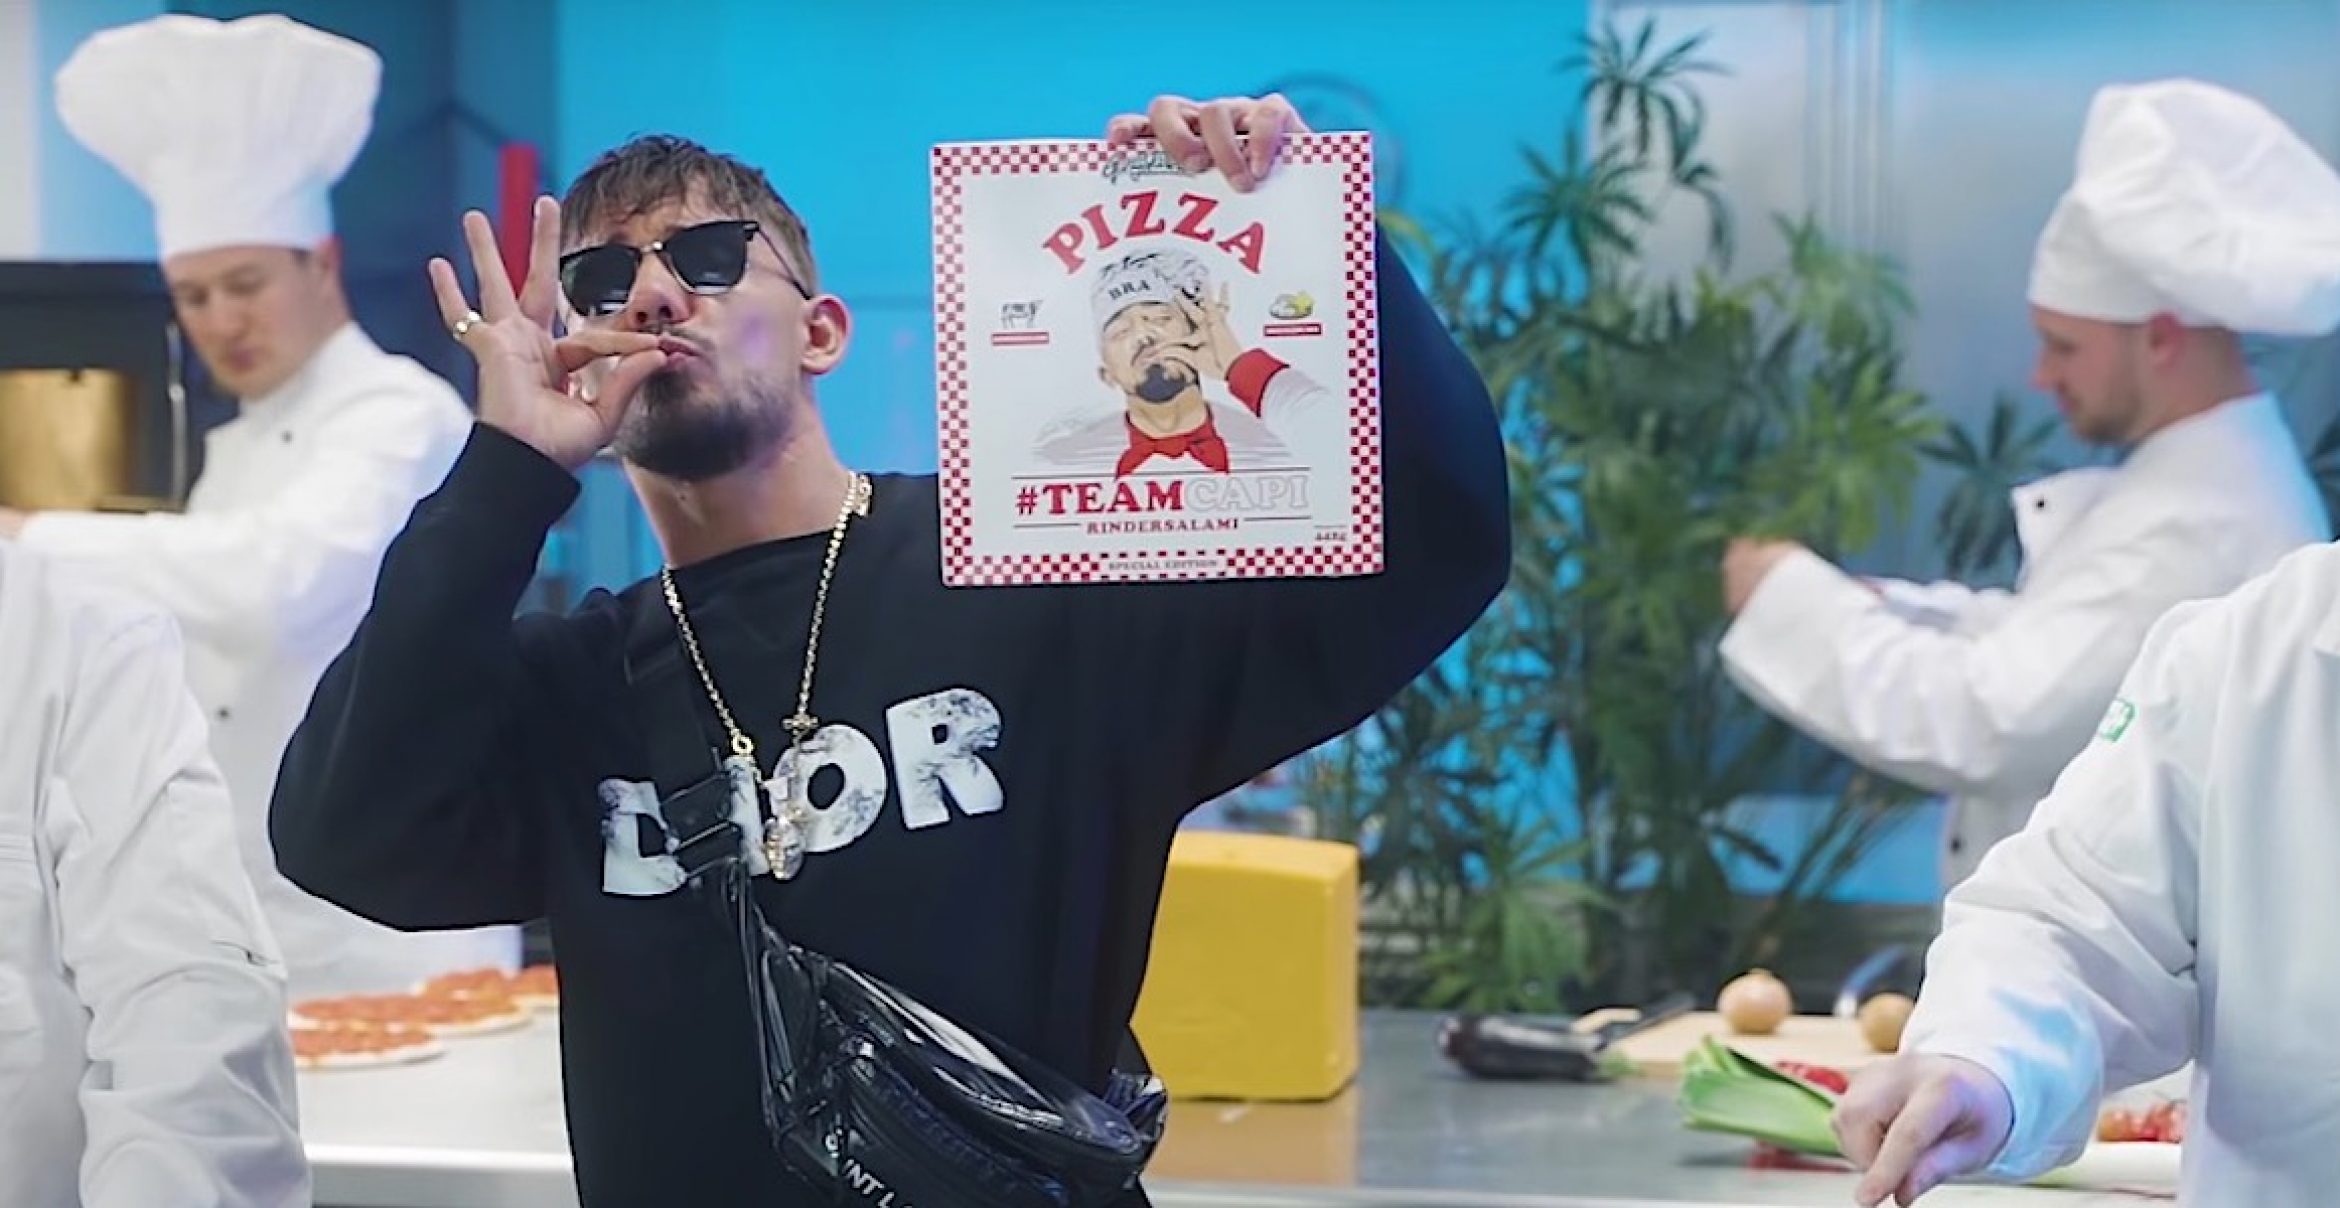 Tiefkühl-Pizzen für Rap-Fans: Capital Bra steigt ins Fertiggericht-Business ein